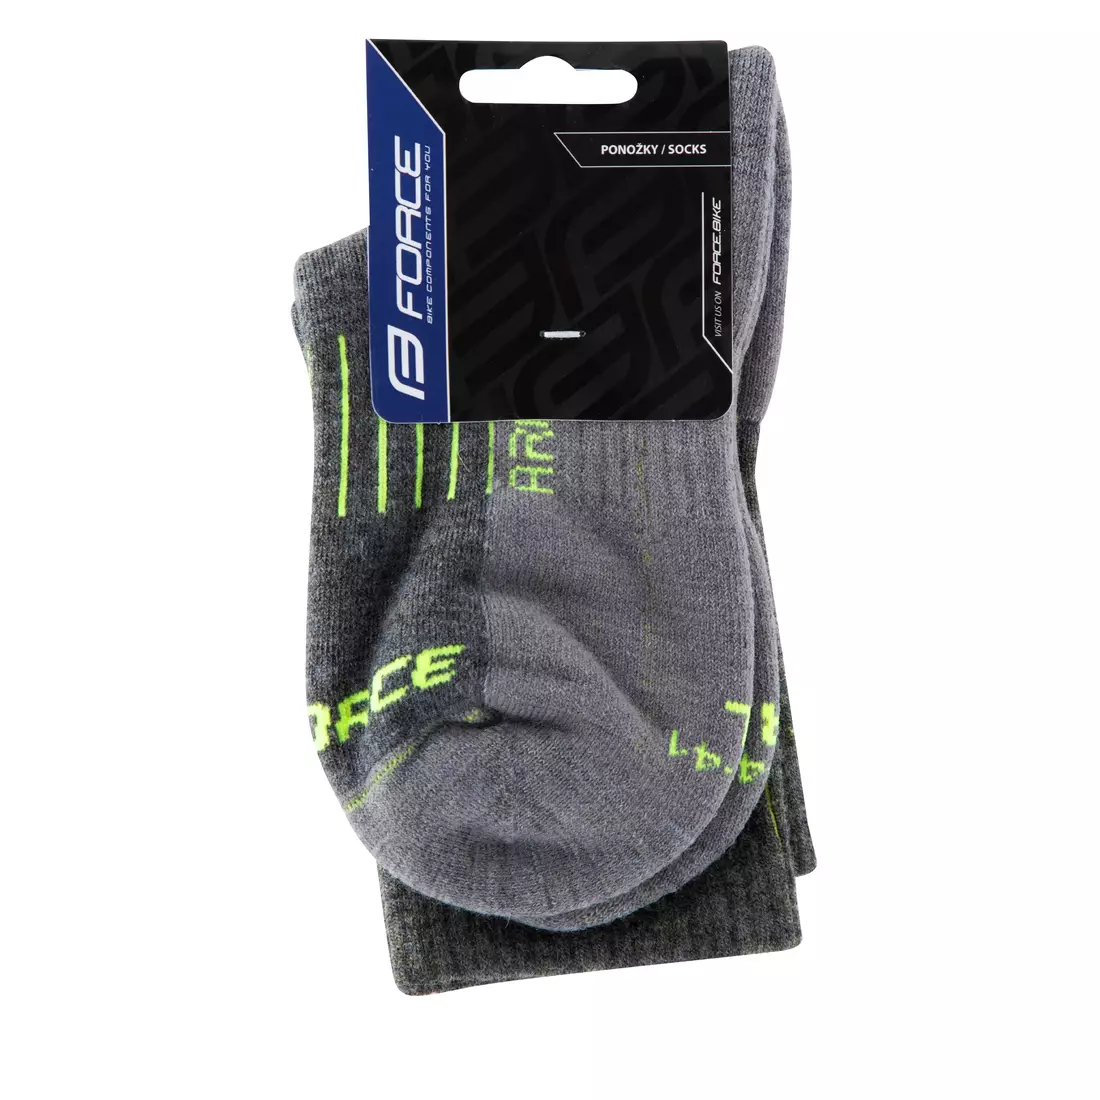 FORCE Cycling socks / sport socks ARCTIC, gray-fluo 9009152